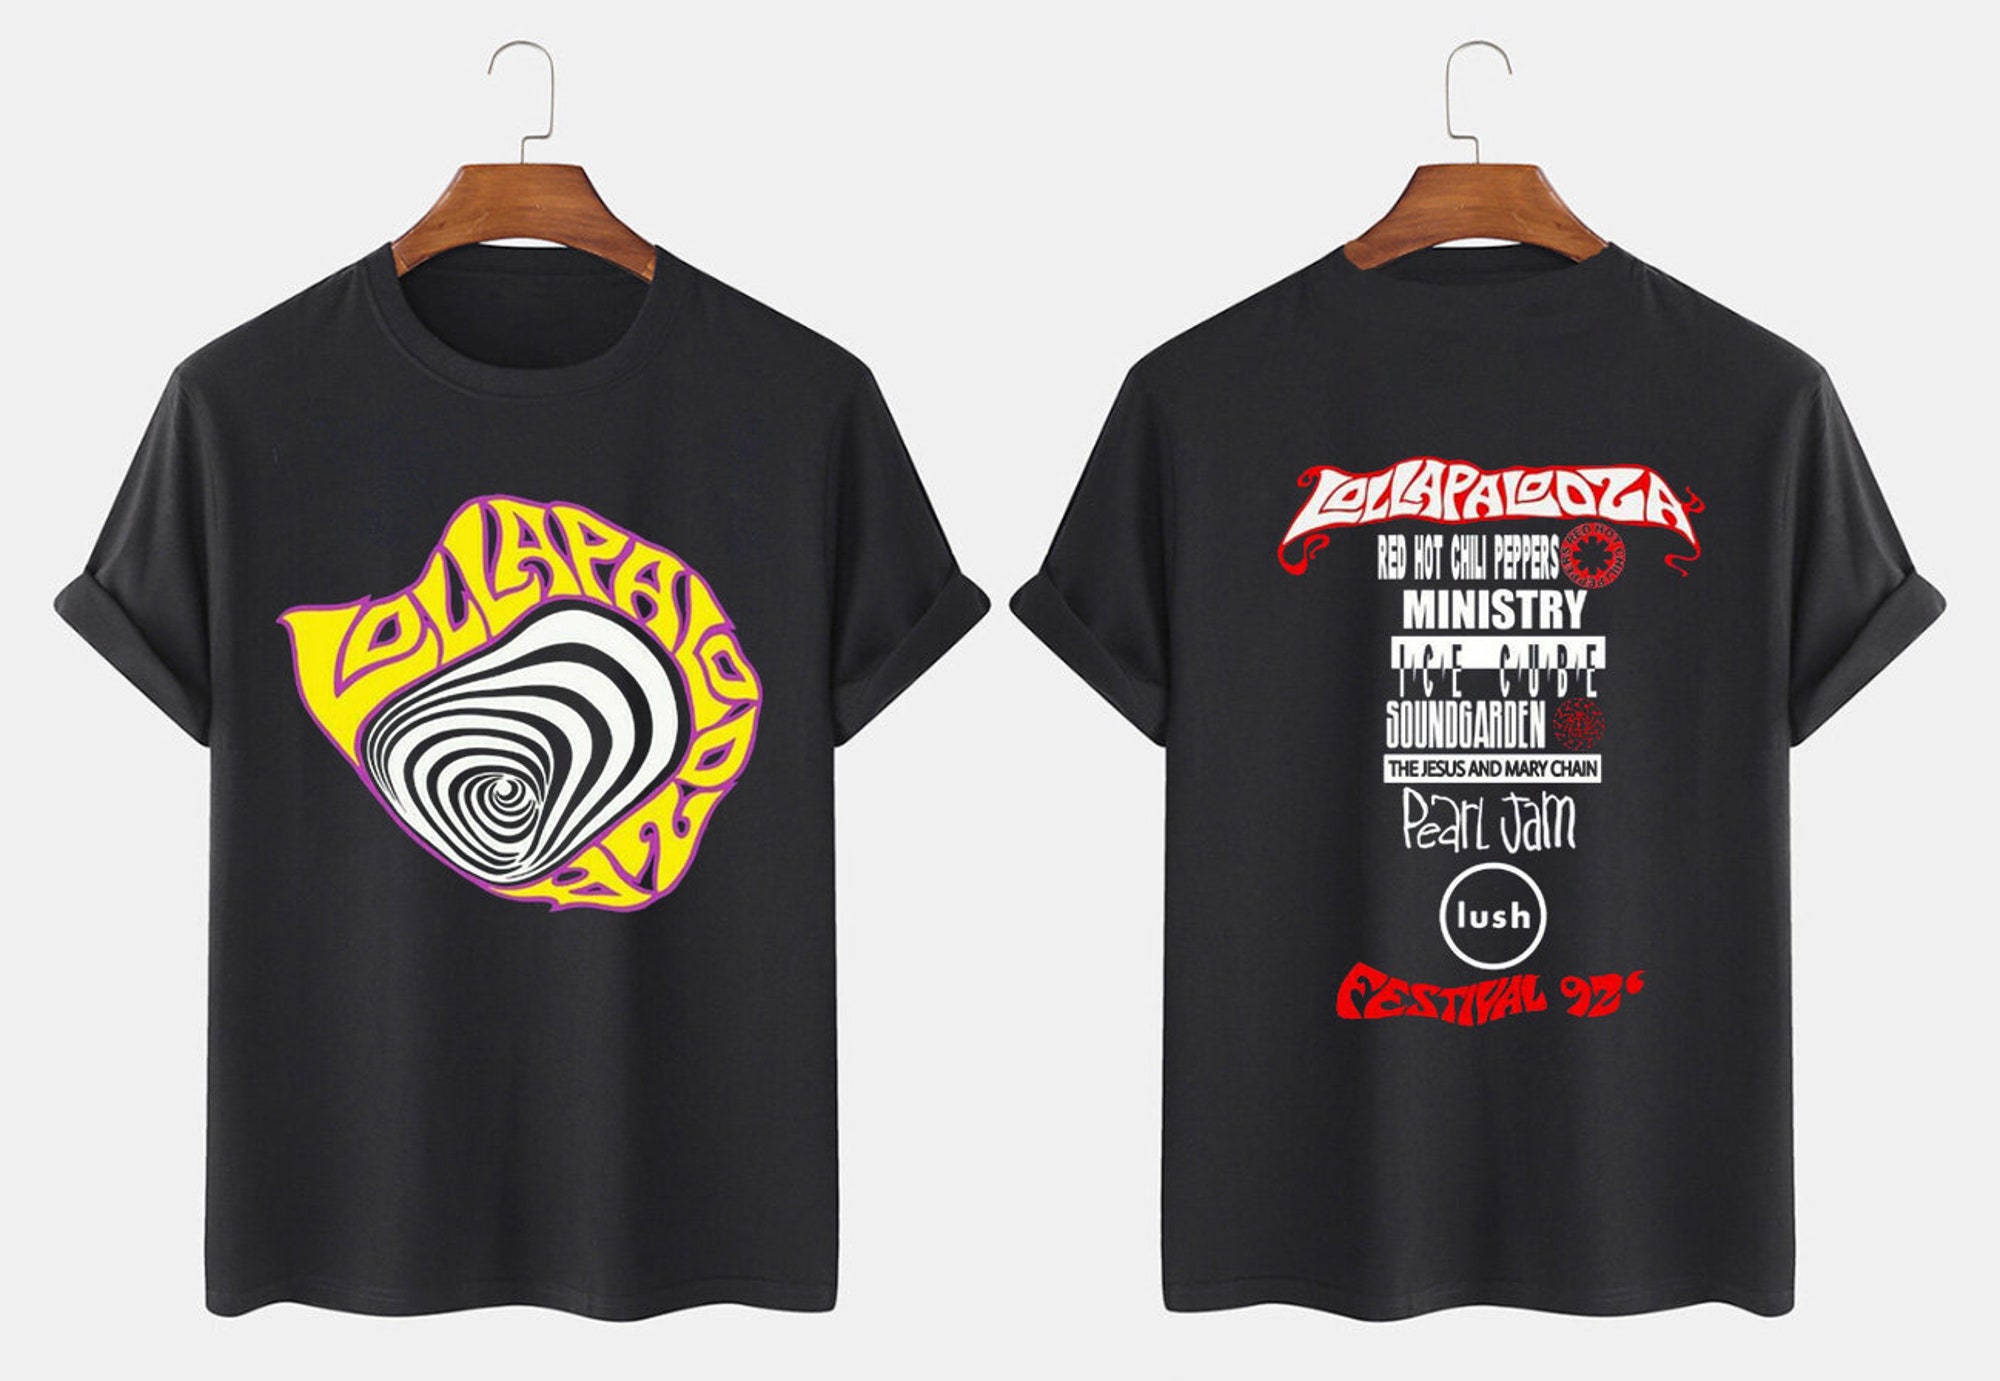 Lollapalooza 1992 Concert Tour Shirt